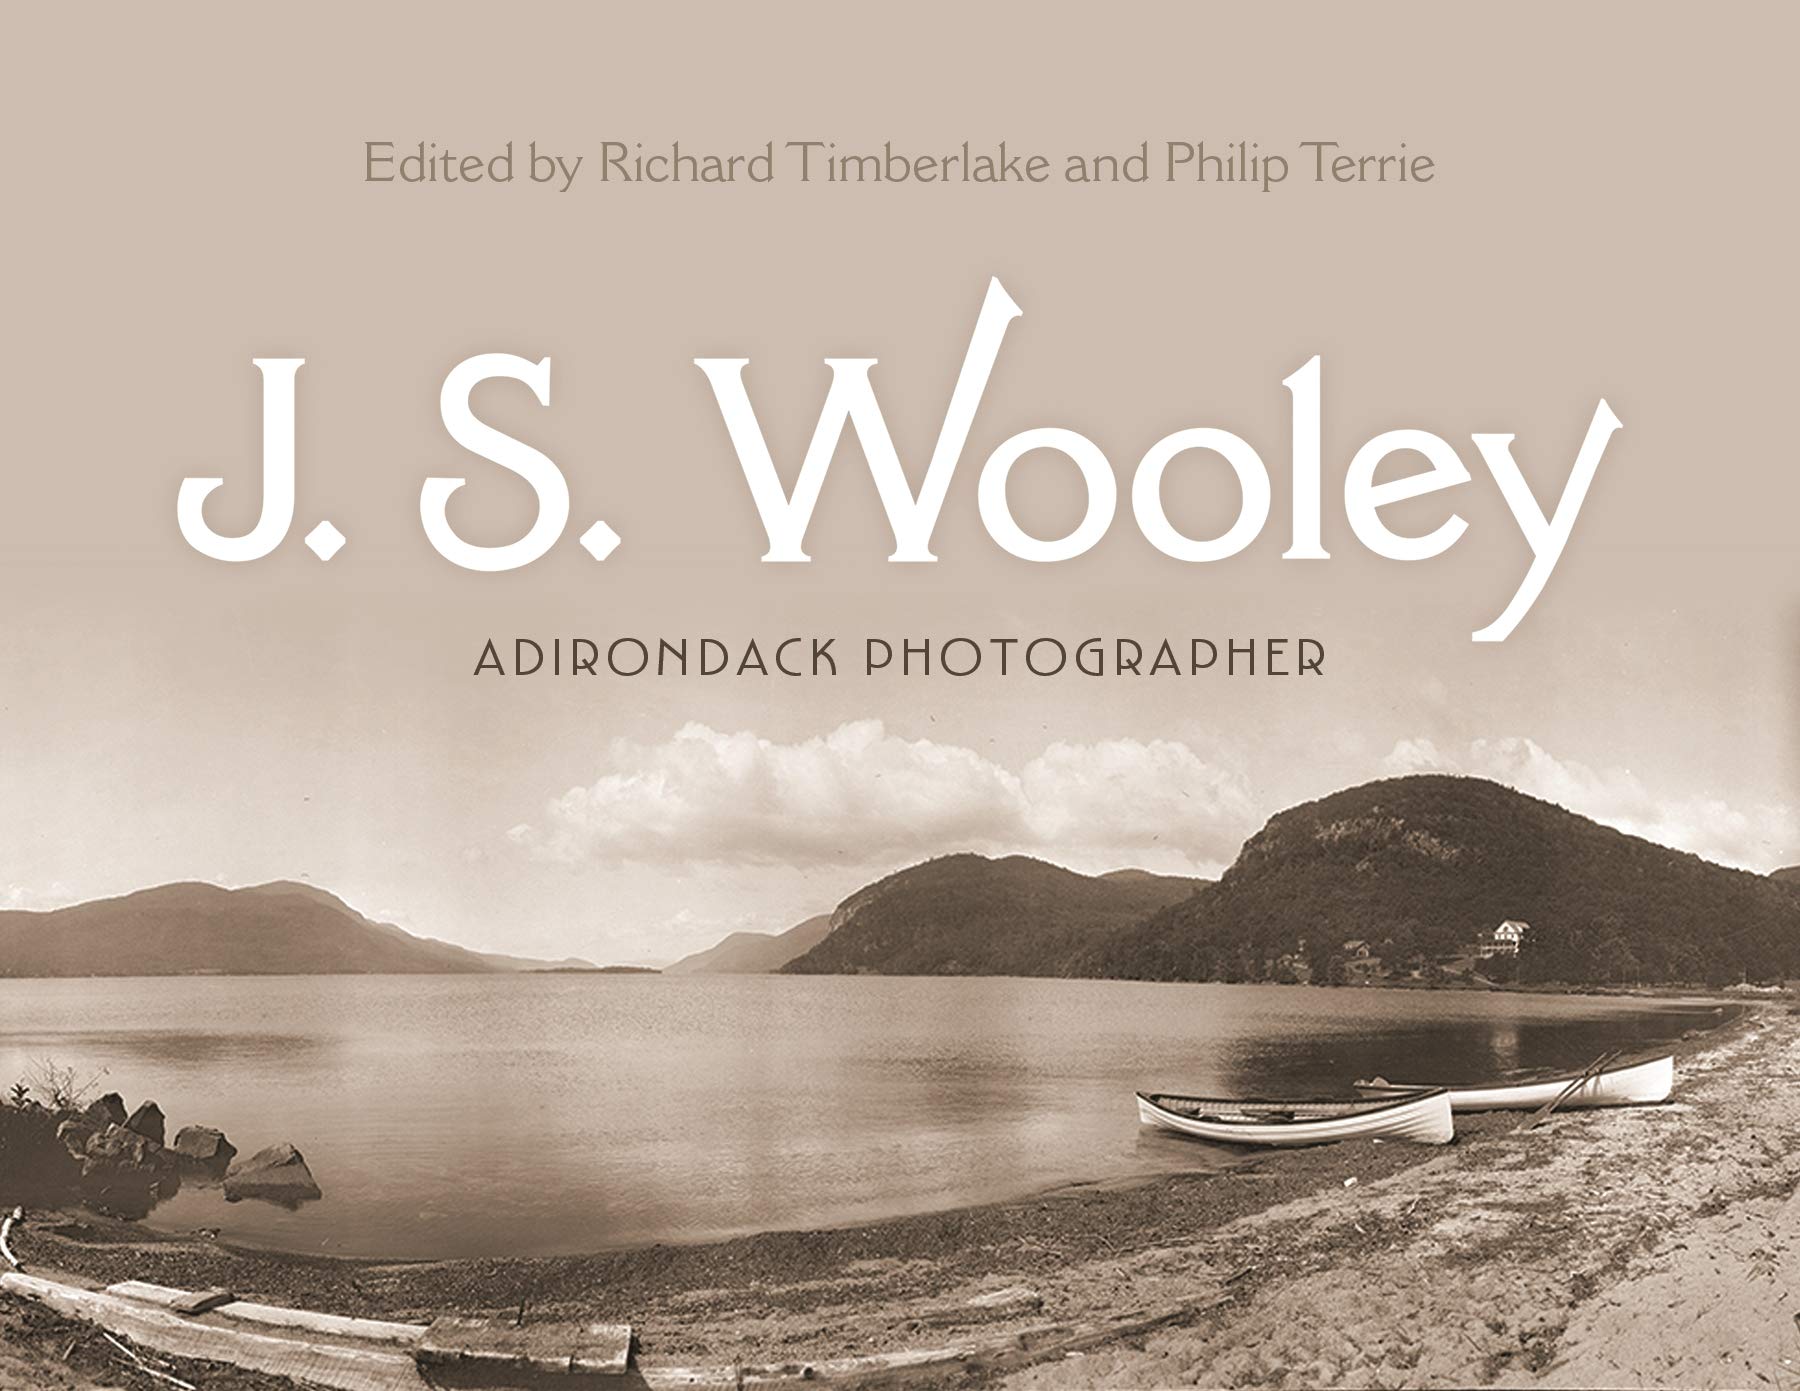 Text: J.S. Wooley, Adirondack Photographer